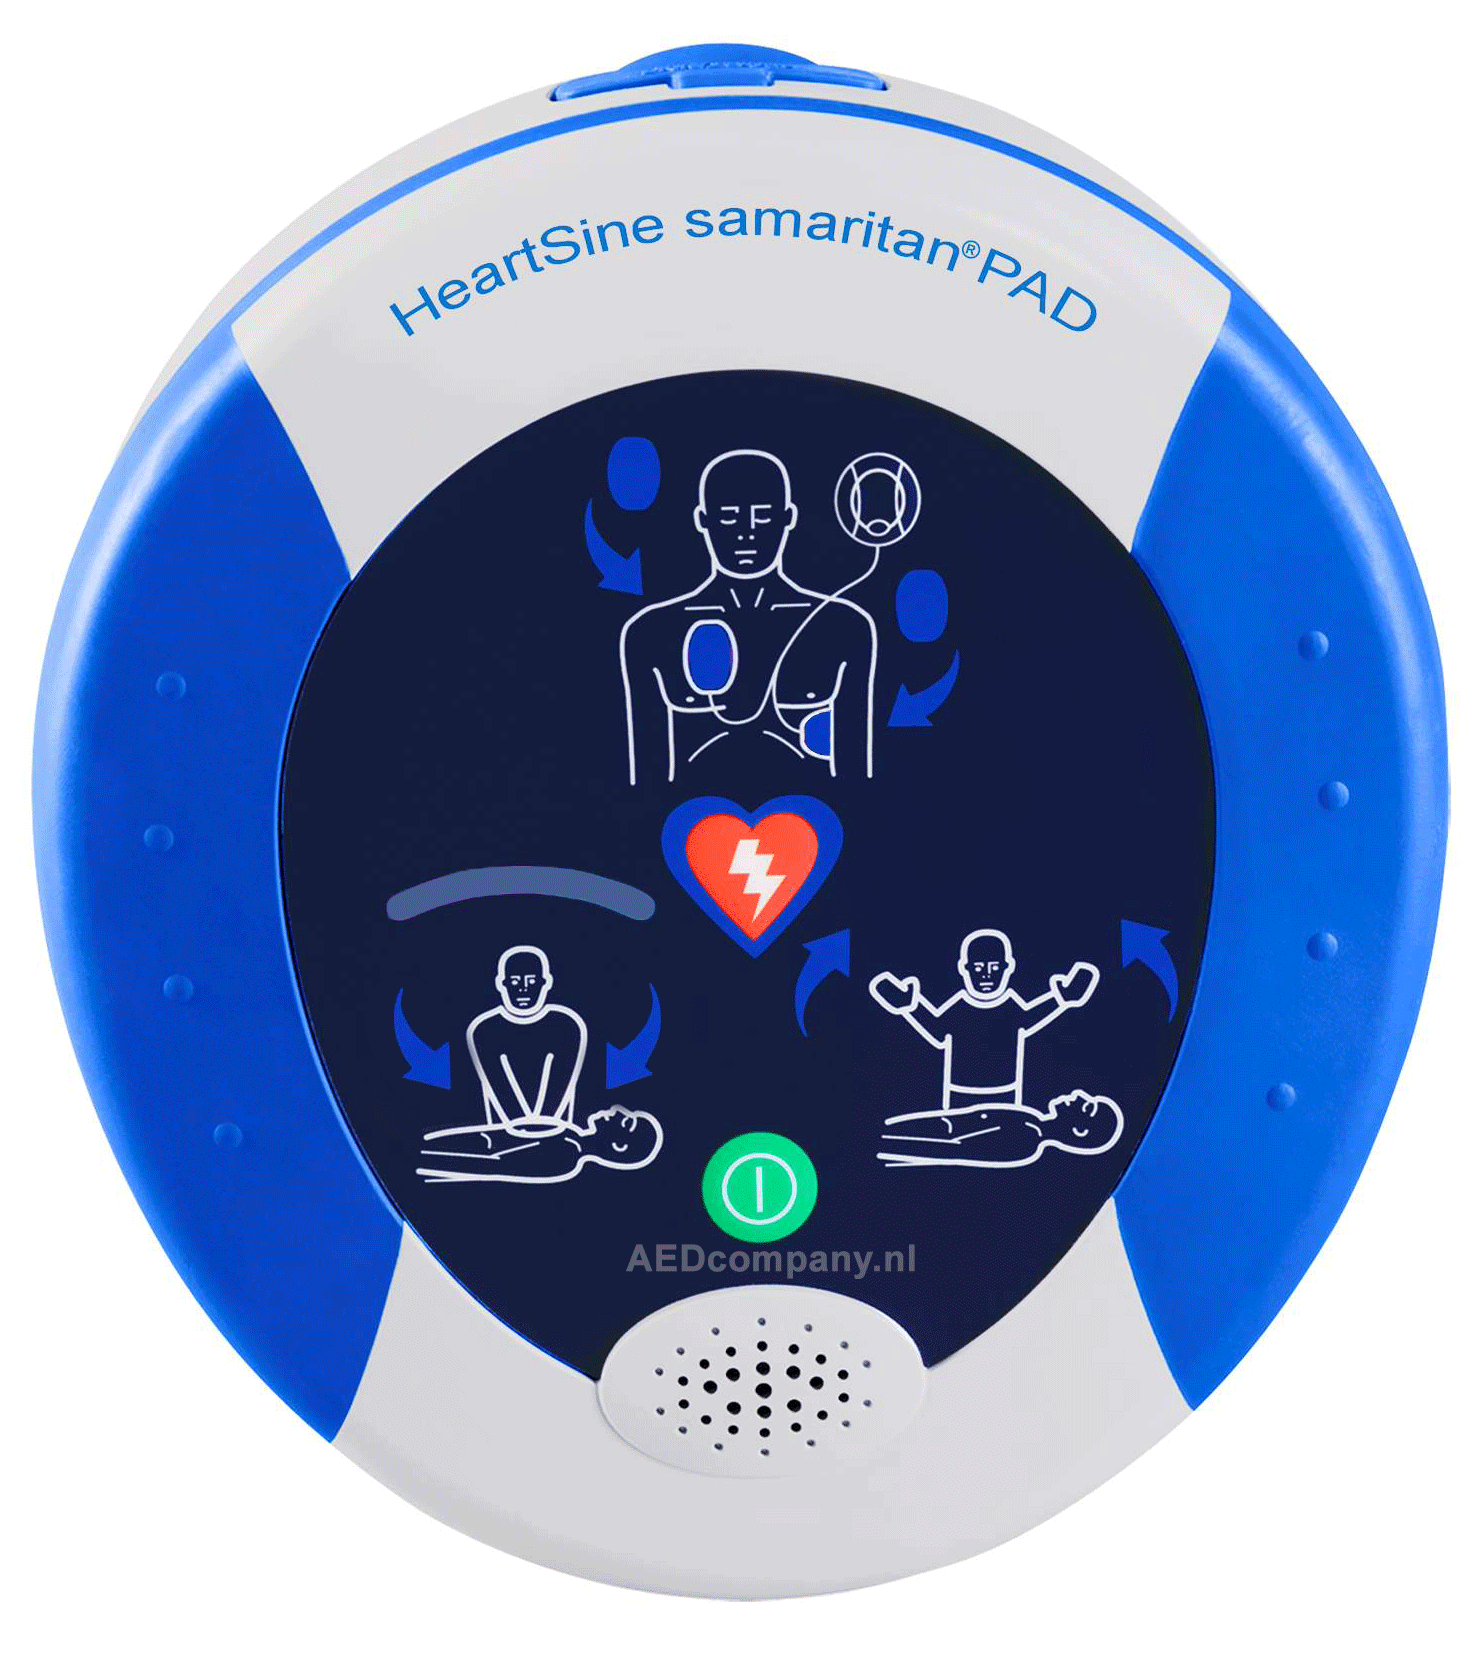 HeartSine Samaritan PAD 500P LED indicatoren